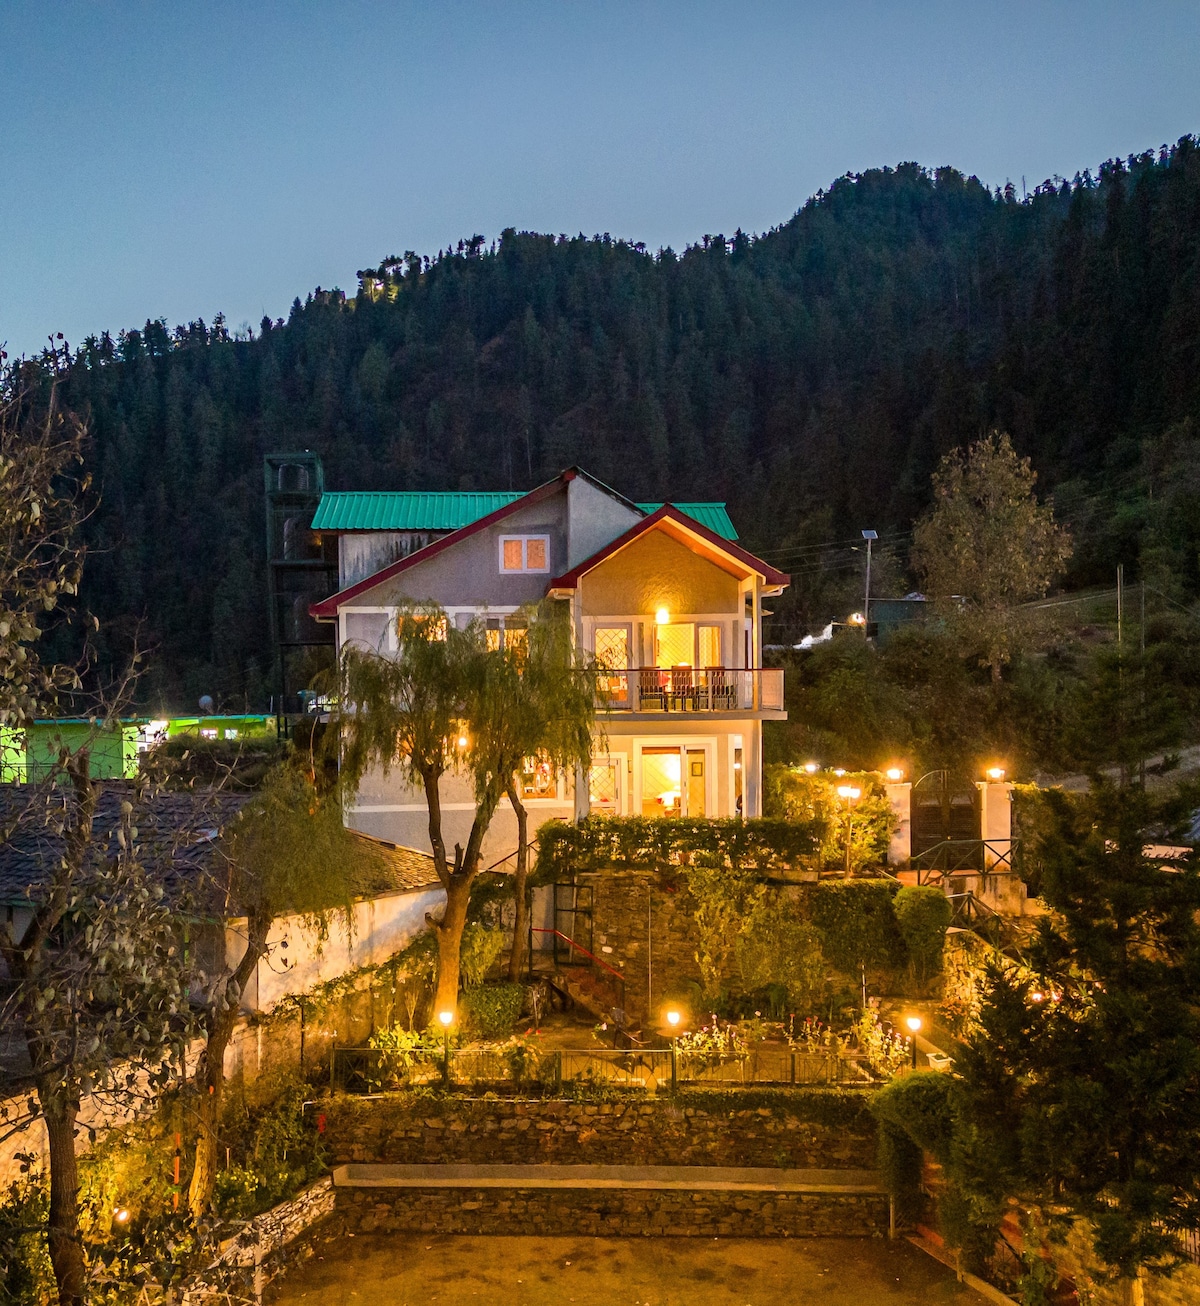 Breezedale: Exclusive Villa in Mashobra, Shimla